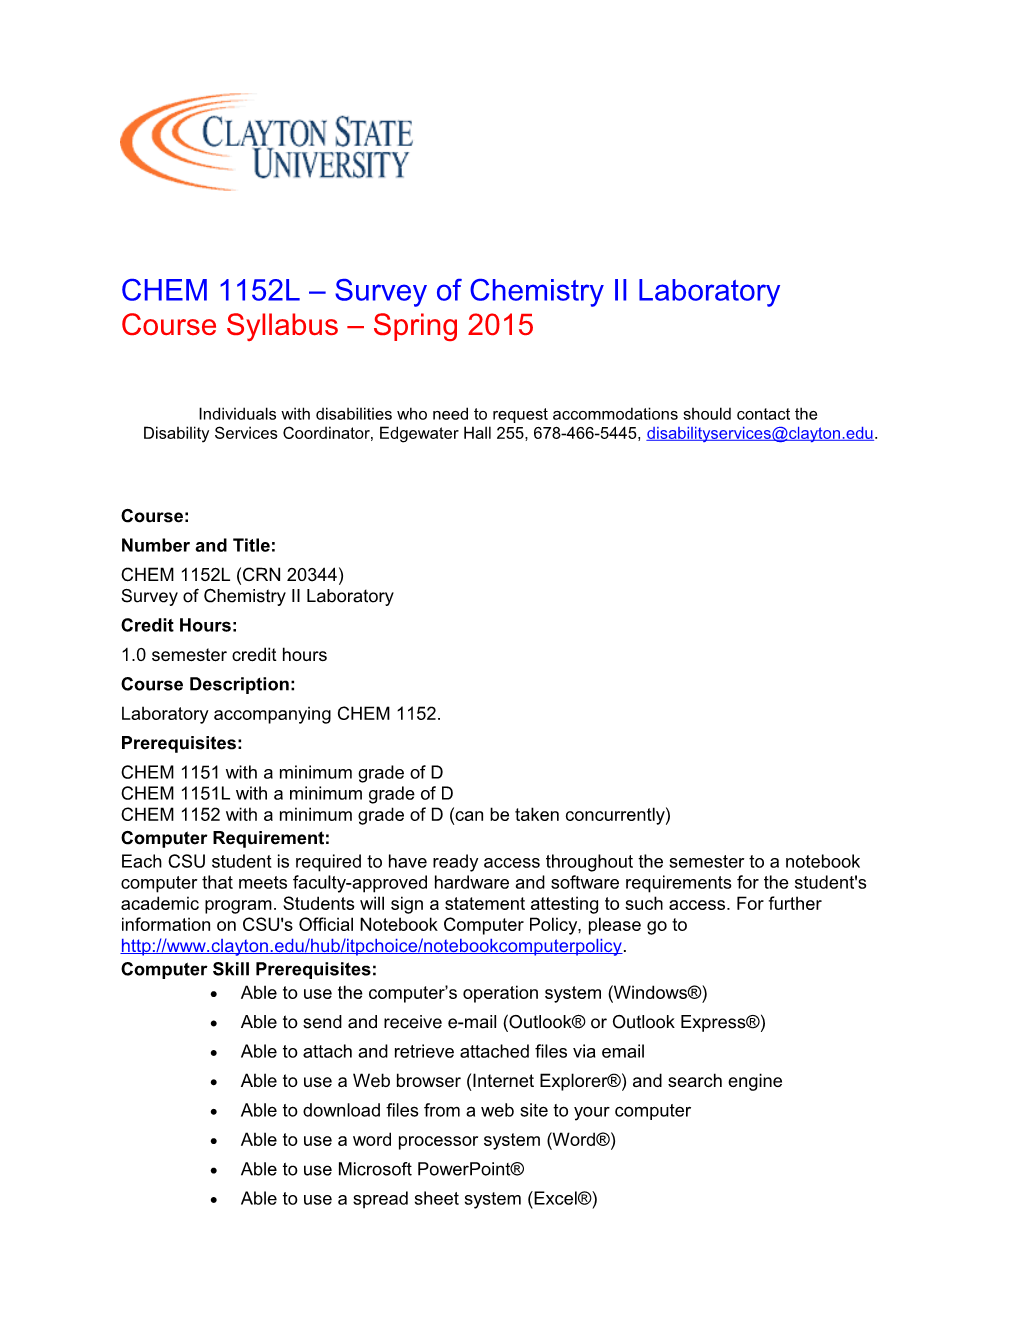 CHEM 1152L Survey of Chemistry II Laboratory Course Syllabus Spring 2015